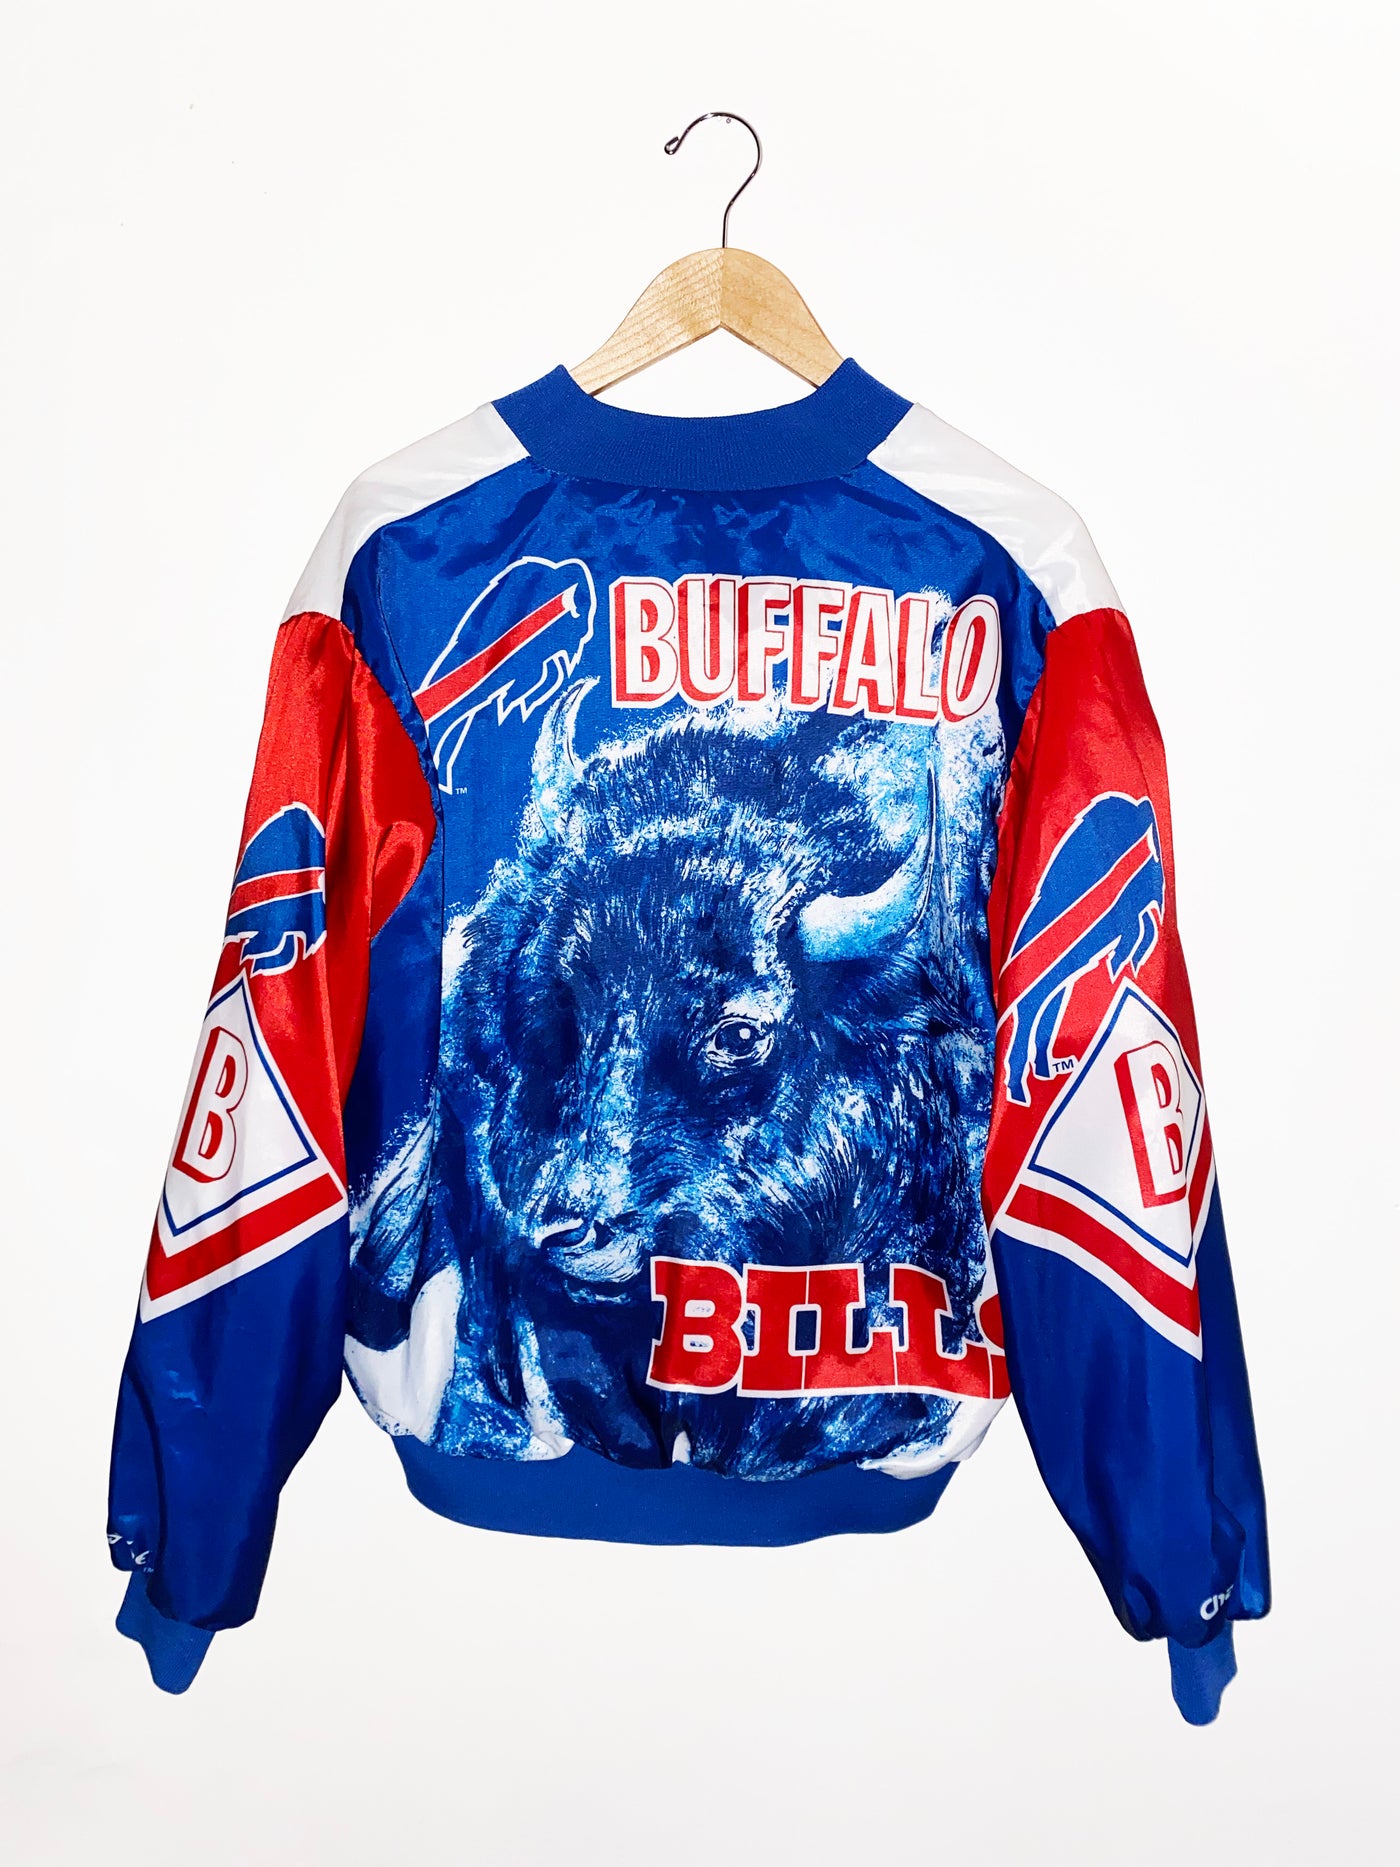 Vintage 90s Buffalo Bills Chalkline Fanimation Jacket